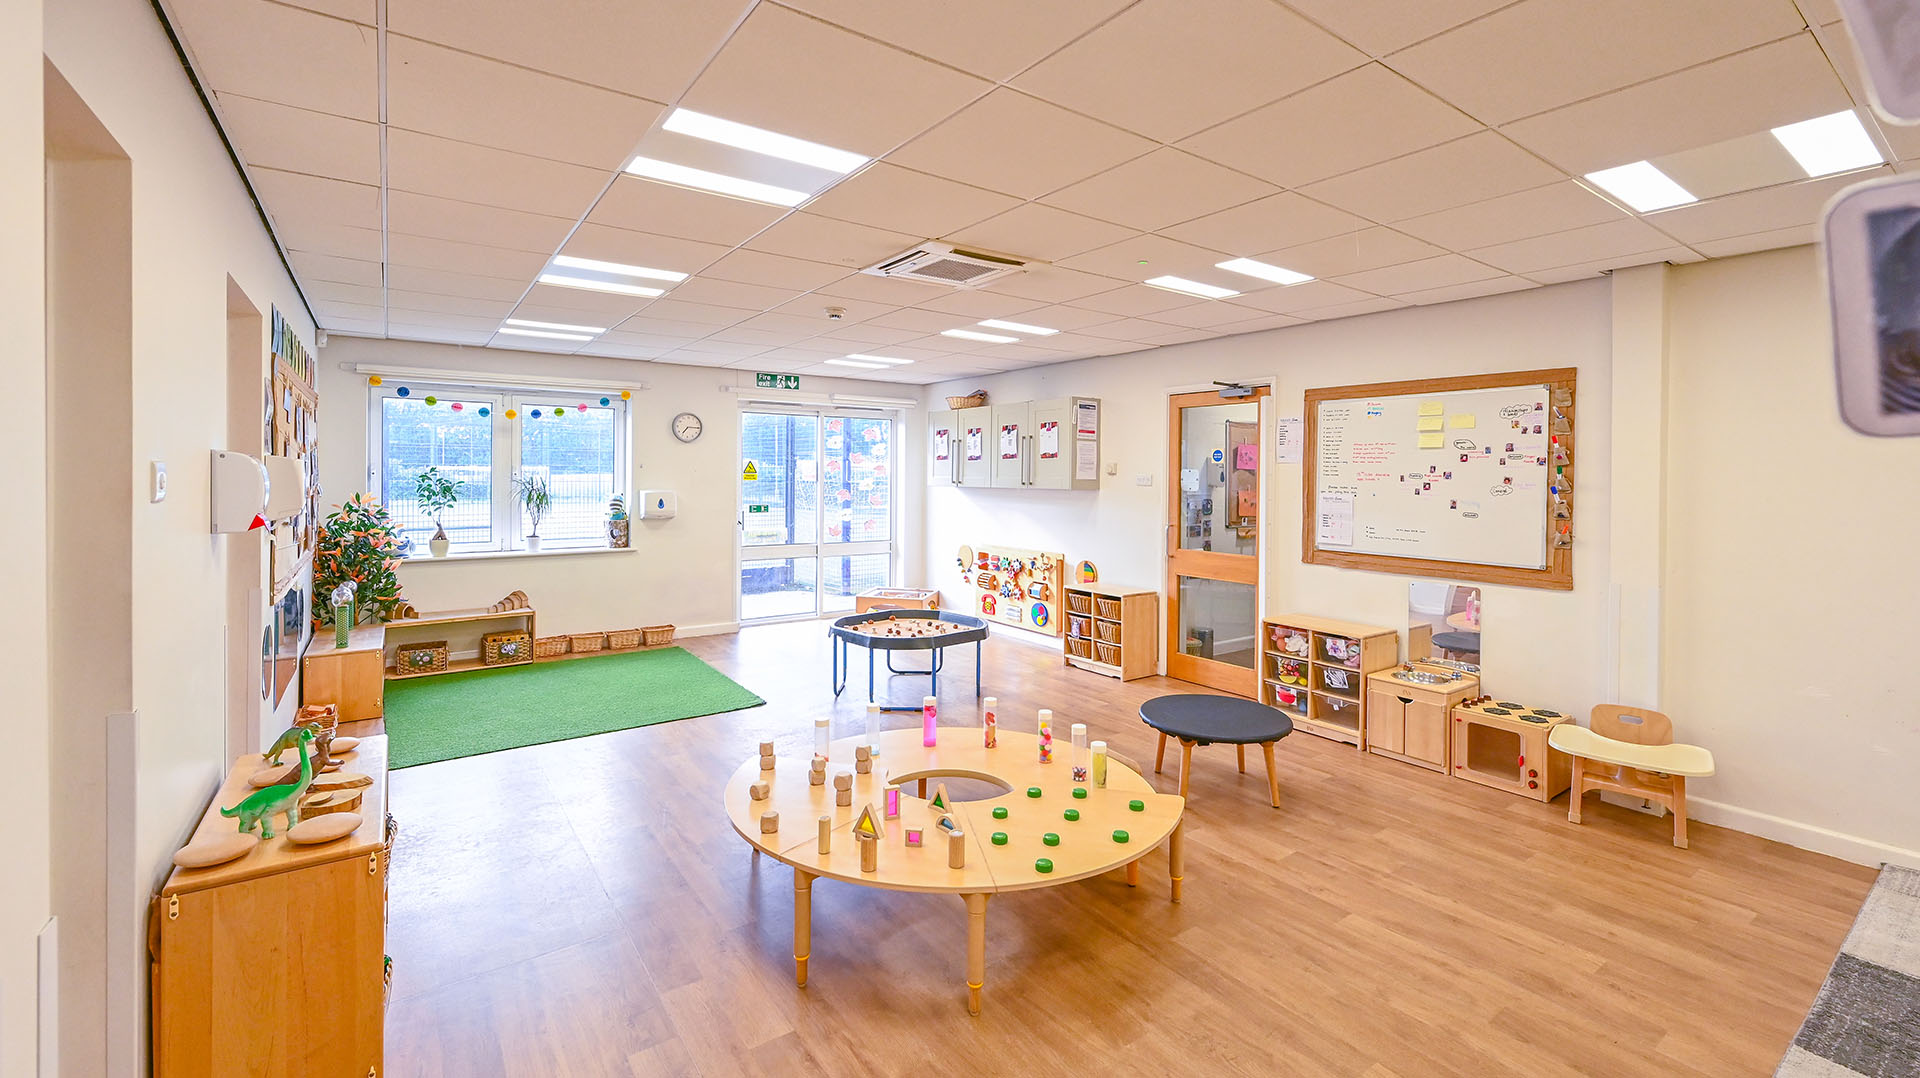 Talbot Woods Day Nursery and Preschool - Baby Room 2